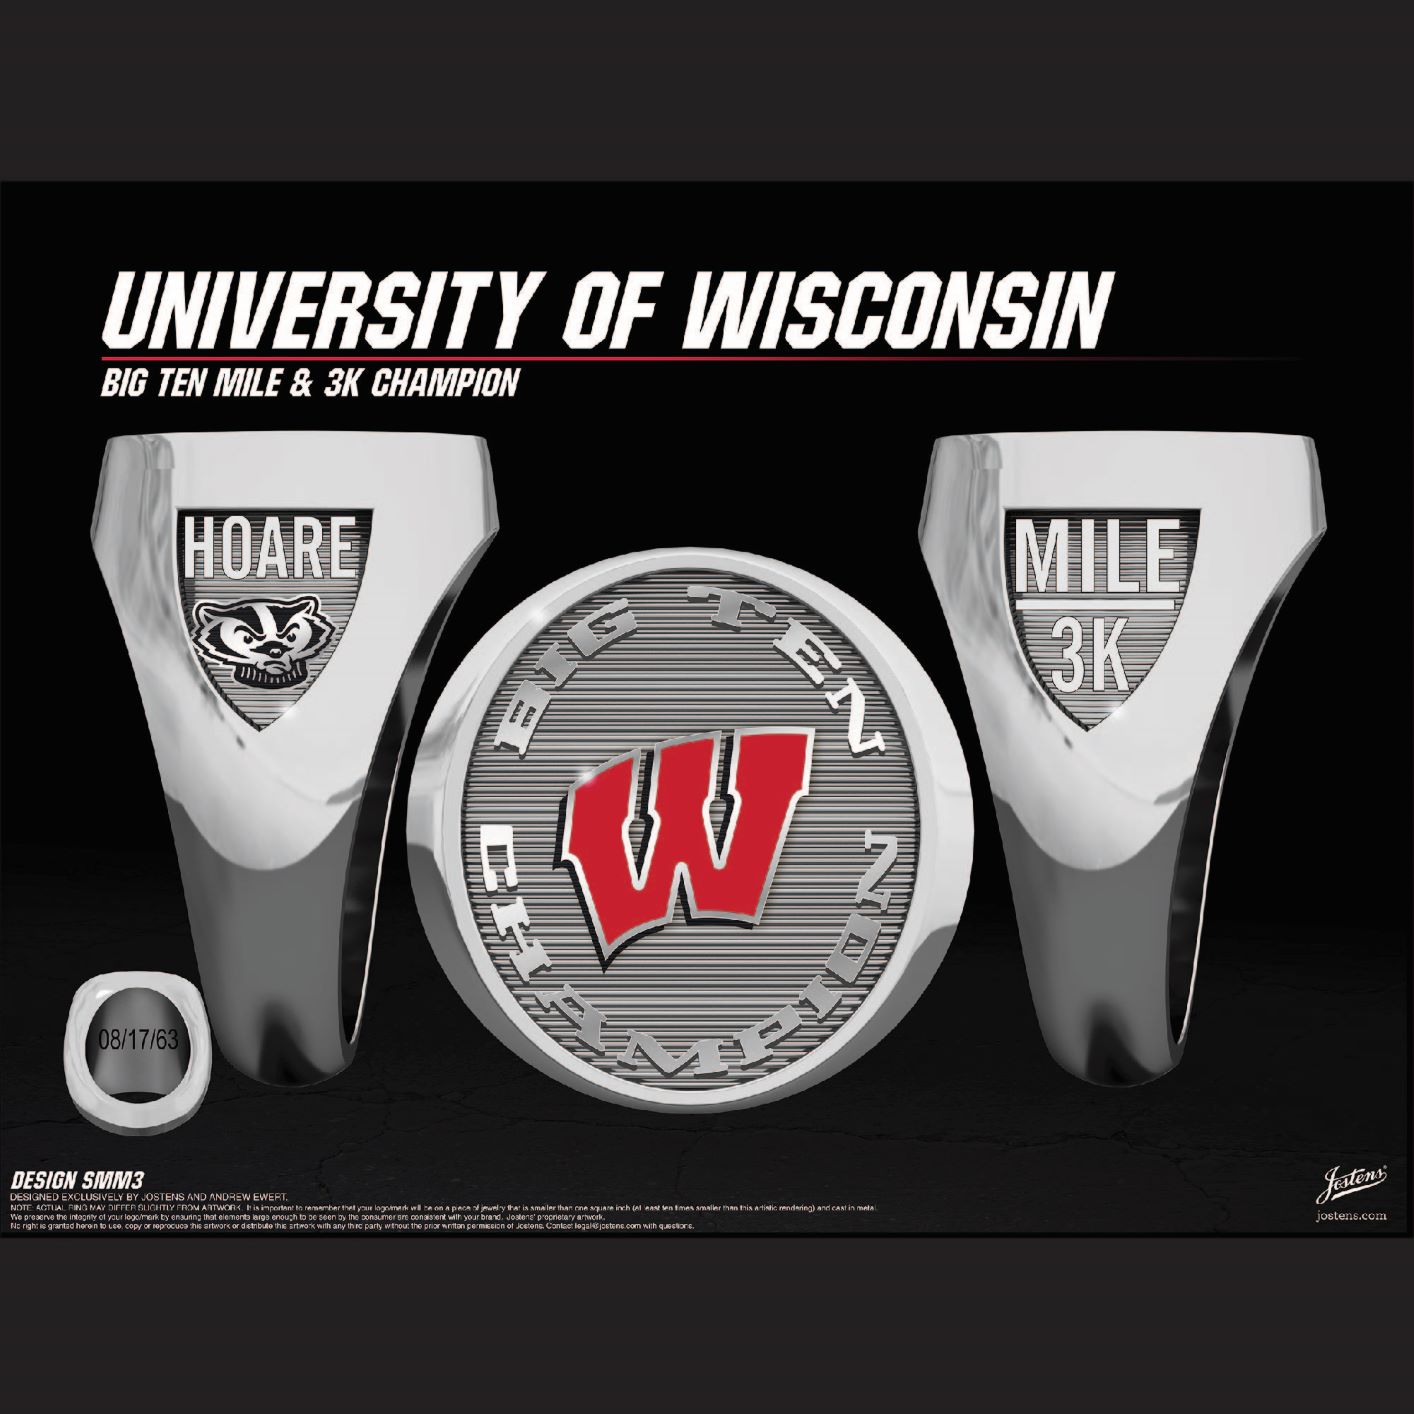 University of Wisconsin Men's Cross Country 2019 Big Ten Championship Ring